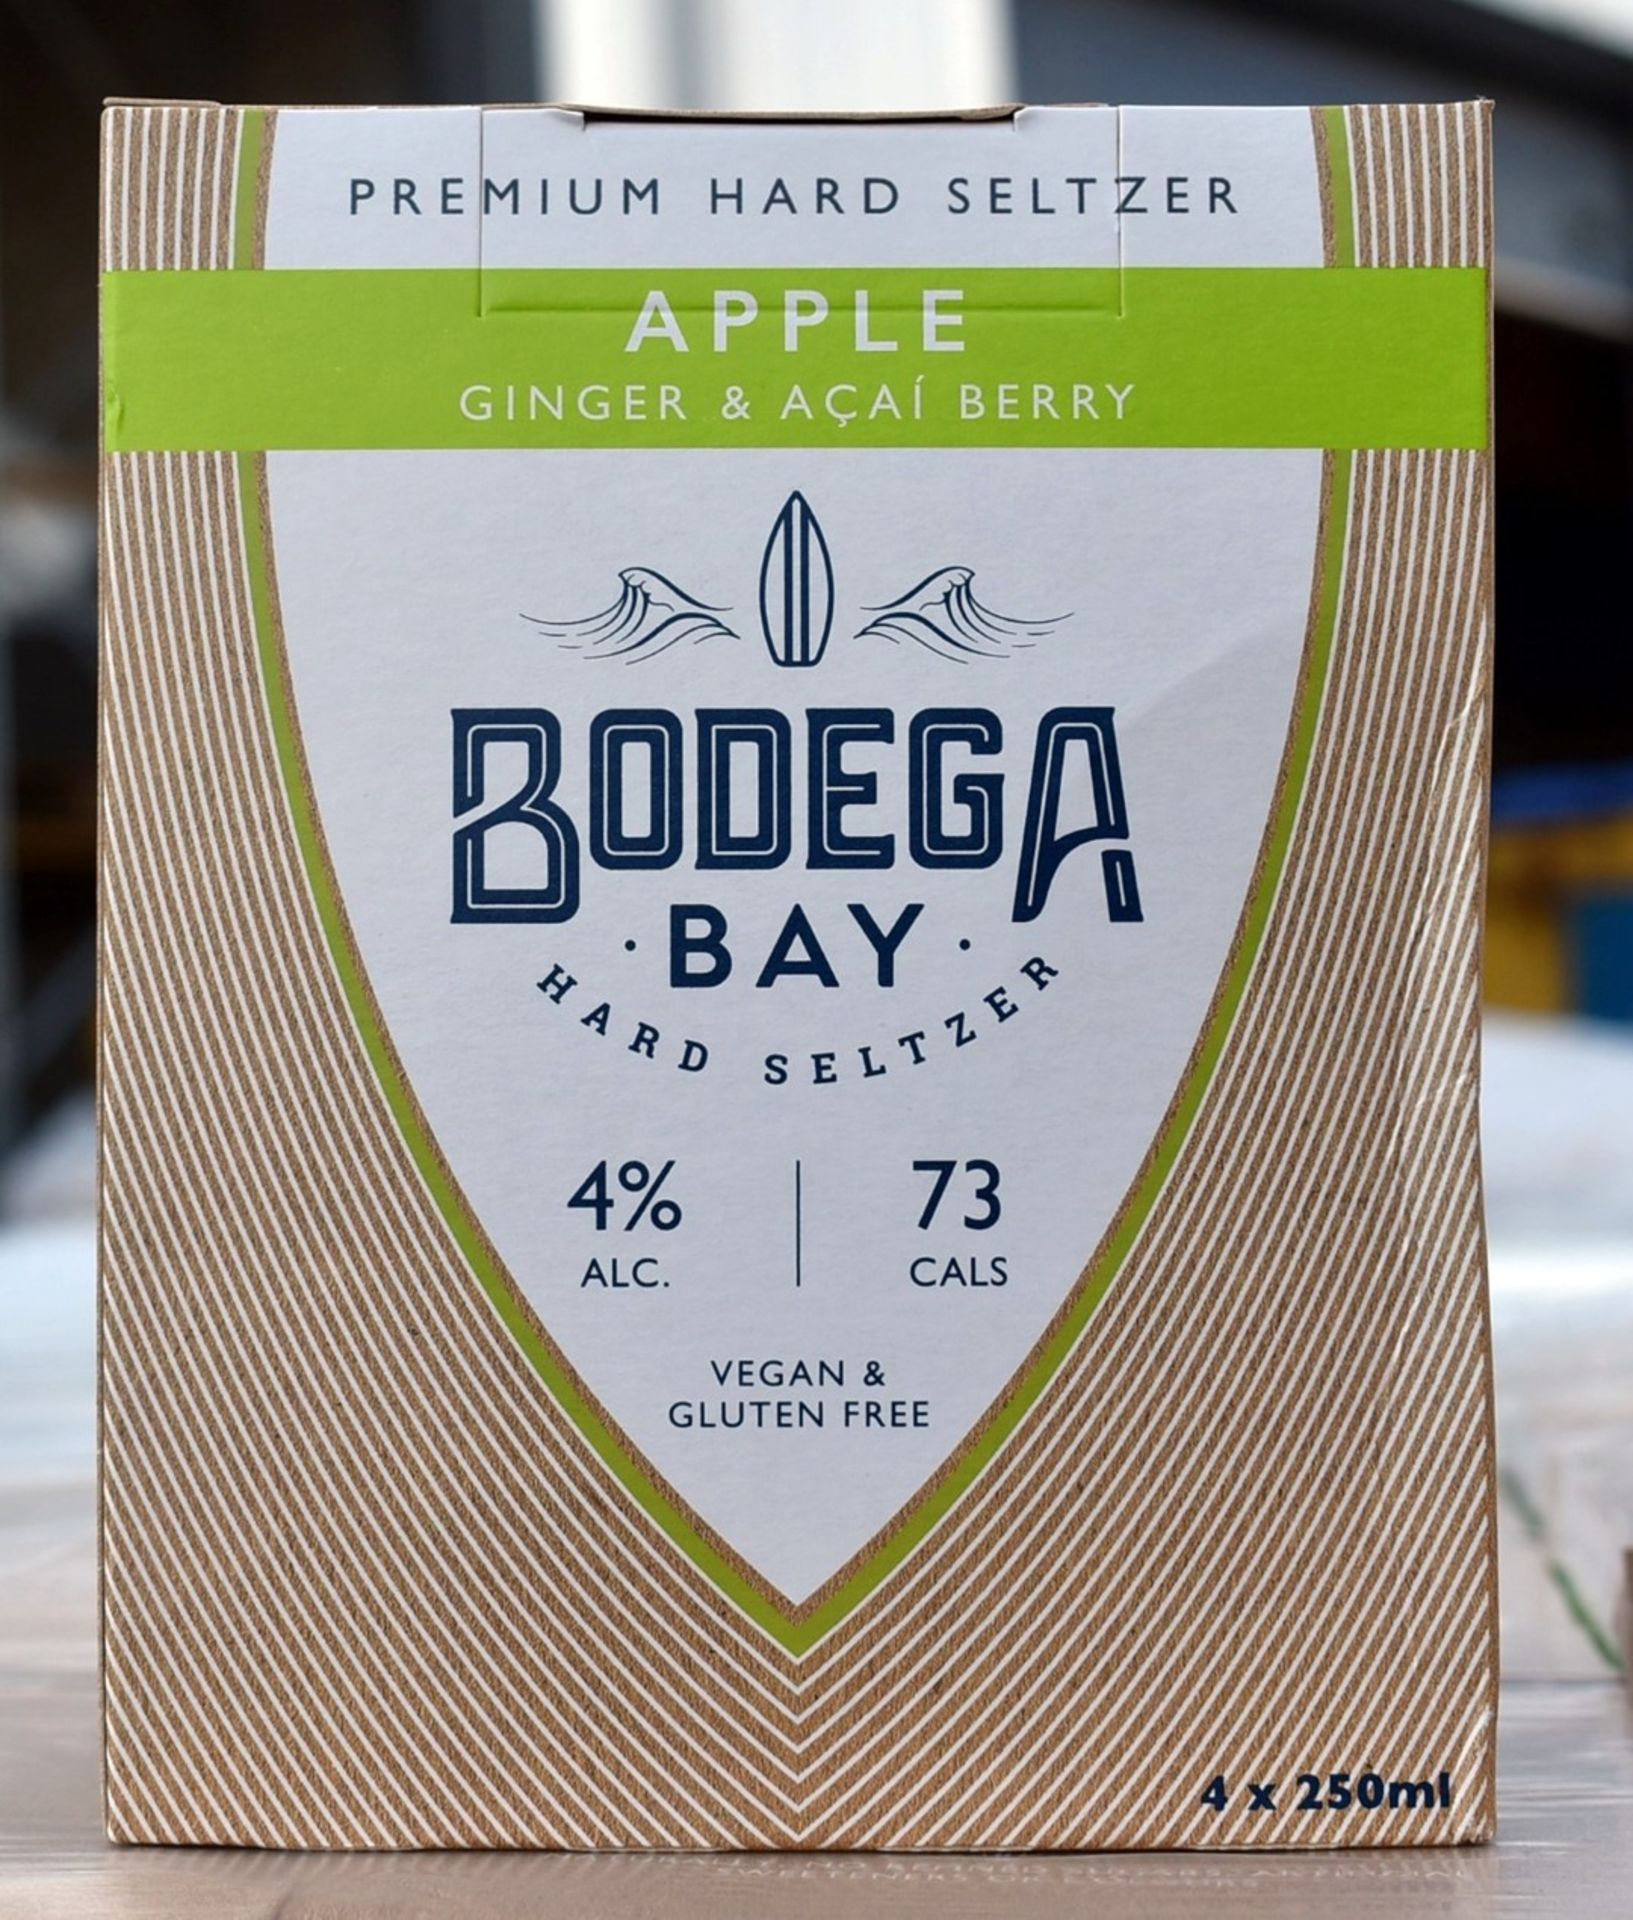 24 x Bodega Bay Hard Seltzer 250ml Alcoholic Sparkling Water Drinks - Apple Ginger & Acai Berry - 4% - Image 3 of 10